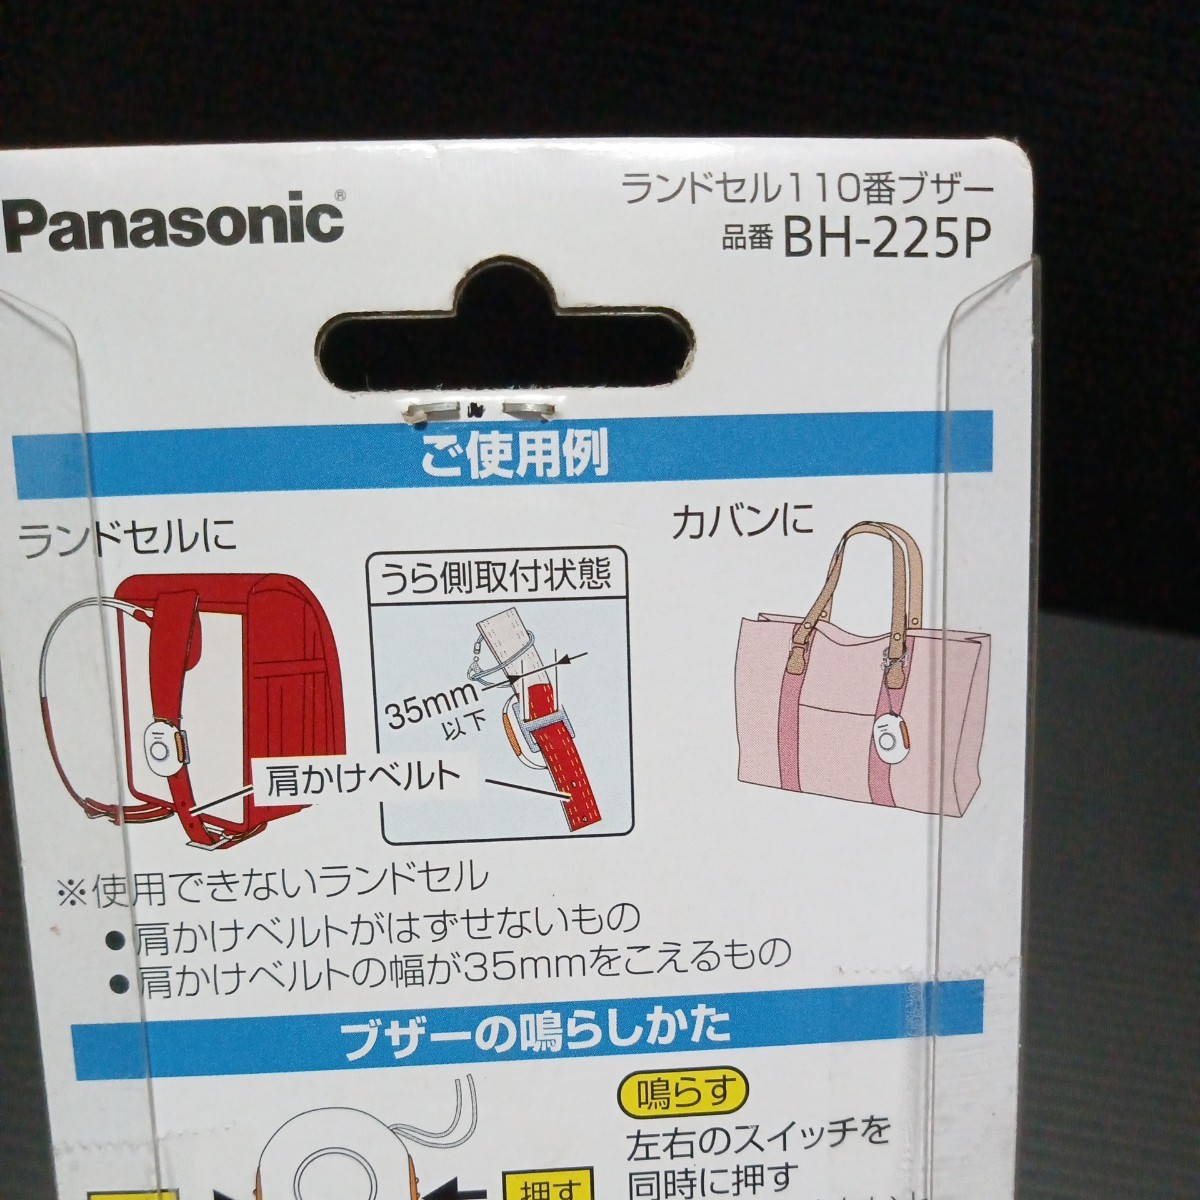 * Panasonic[ knapsack 110 number buzzer ] BH-225P personal alarm Panasonic crime prevention alarm 